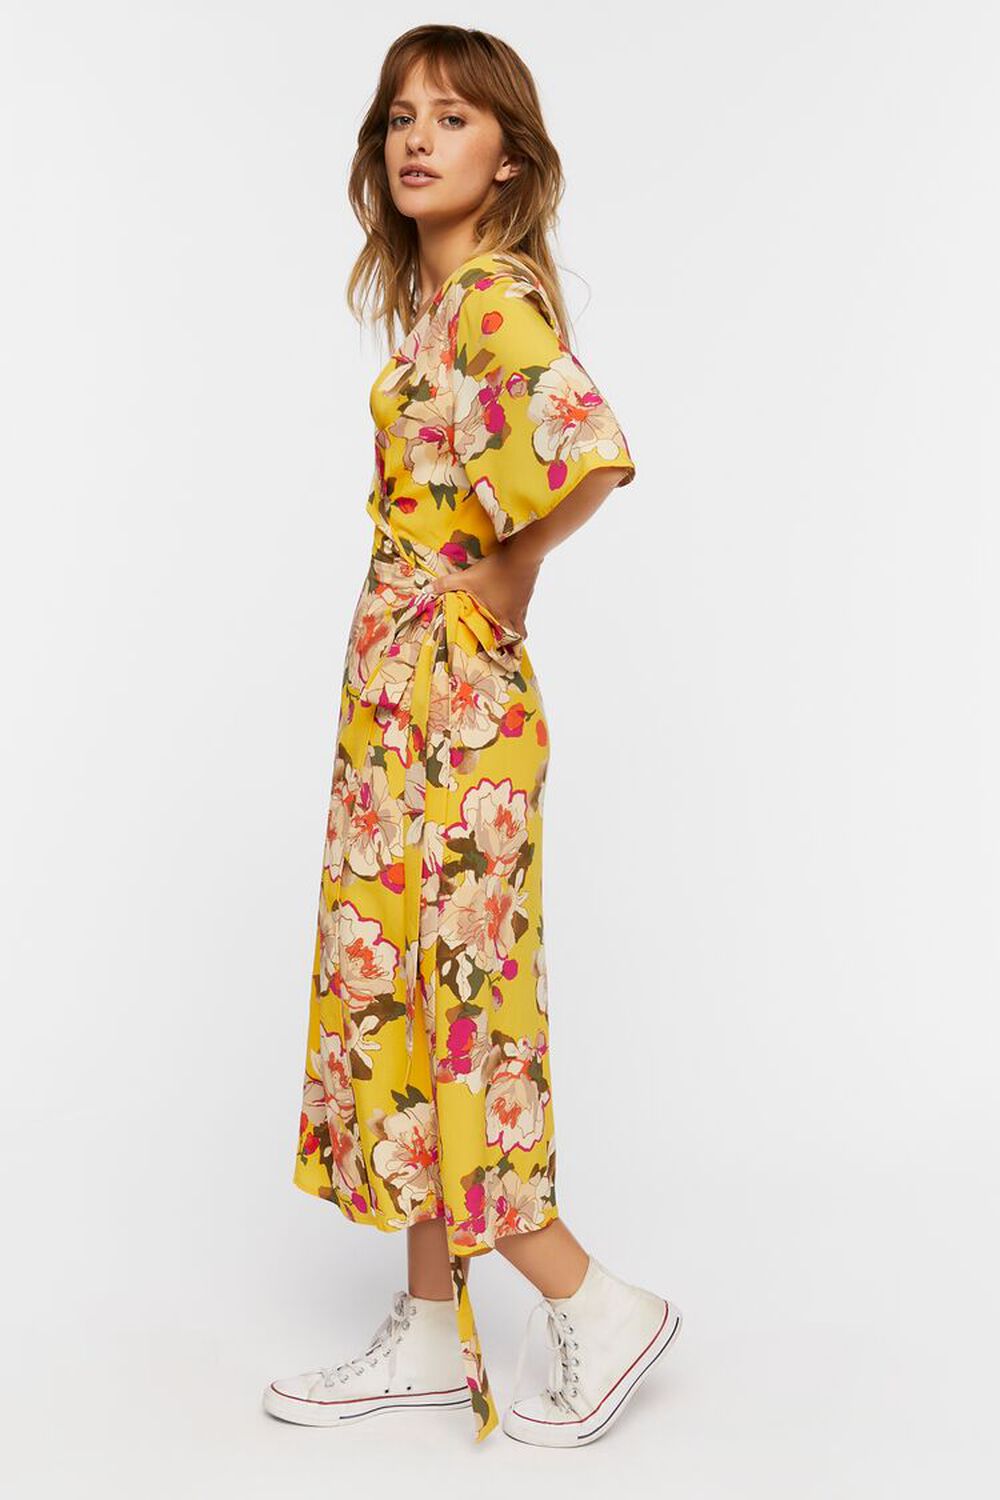 YELLOW/MULTI Floral Midi Wrap Dress, image 2